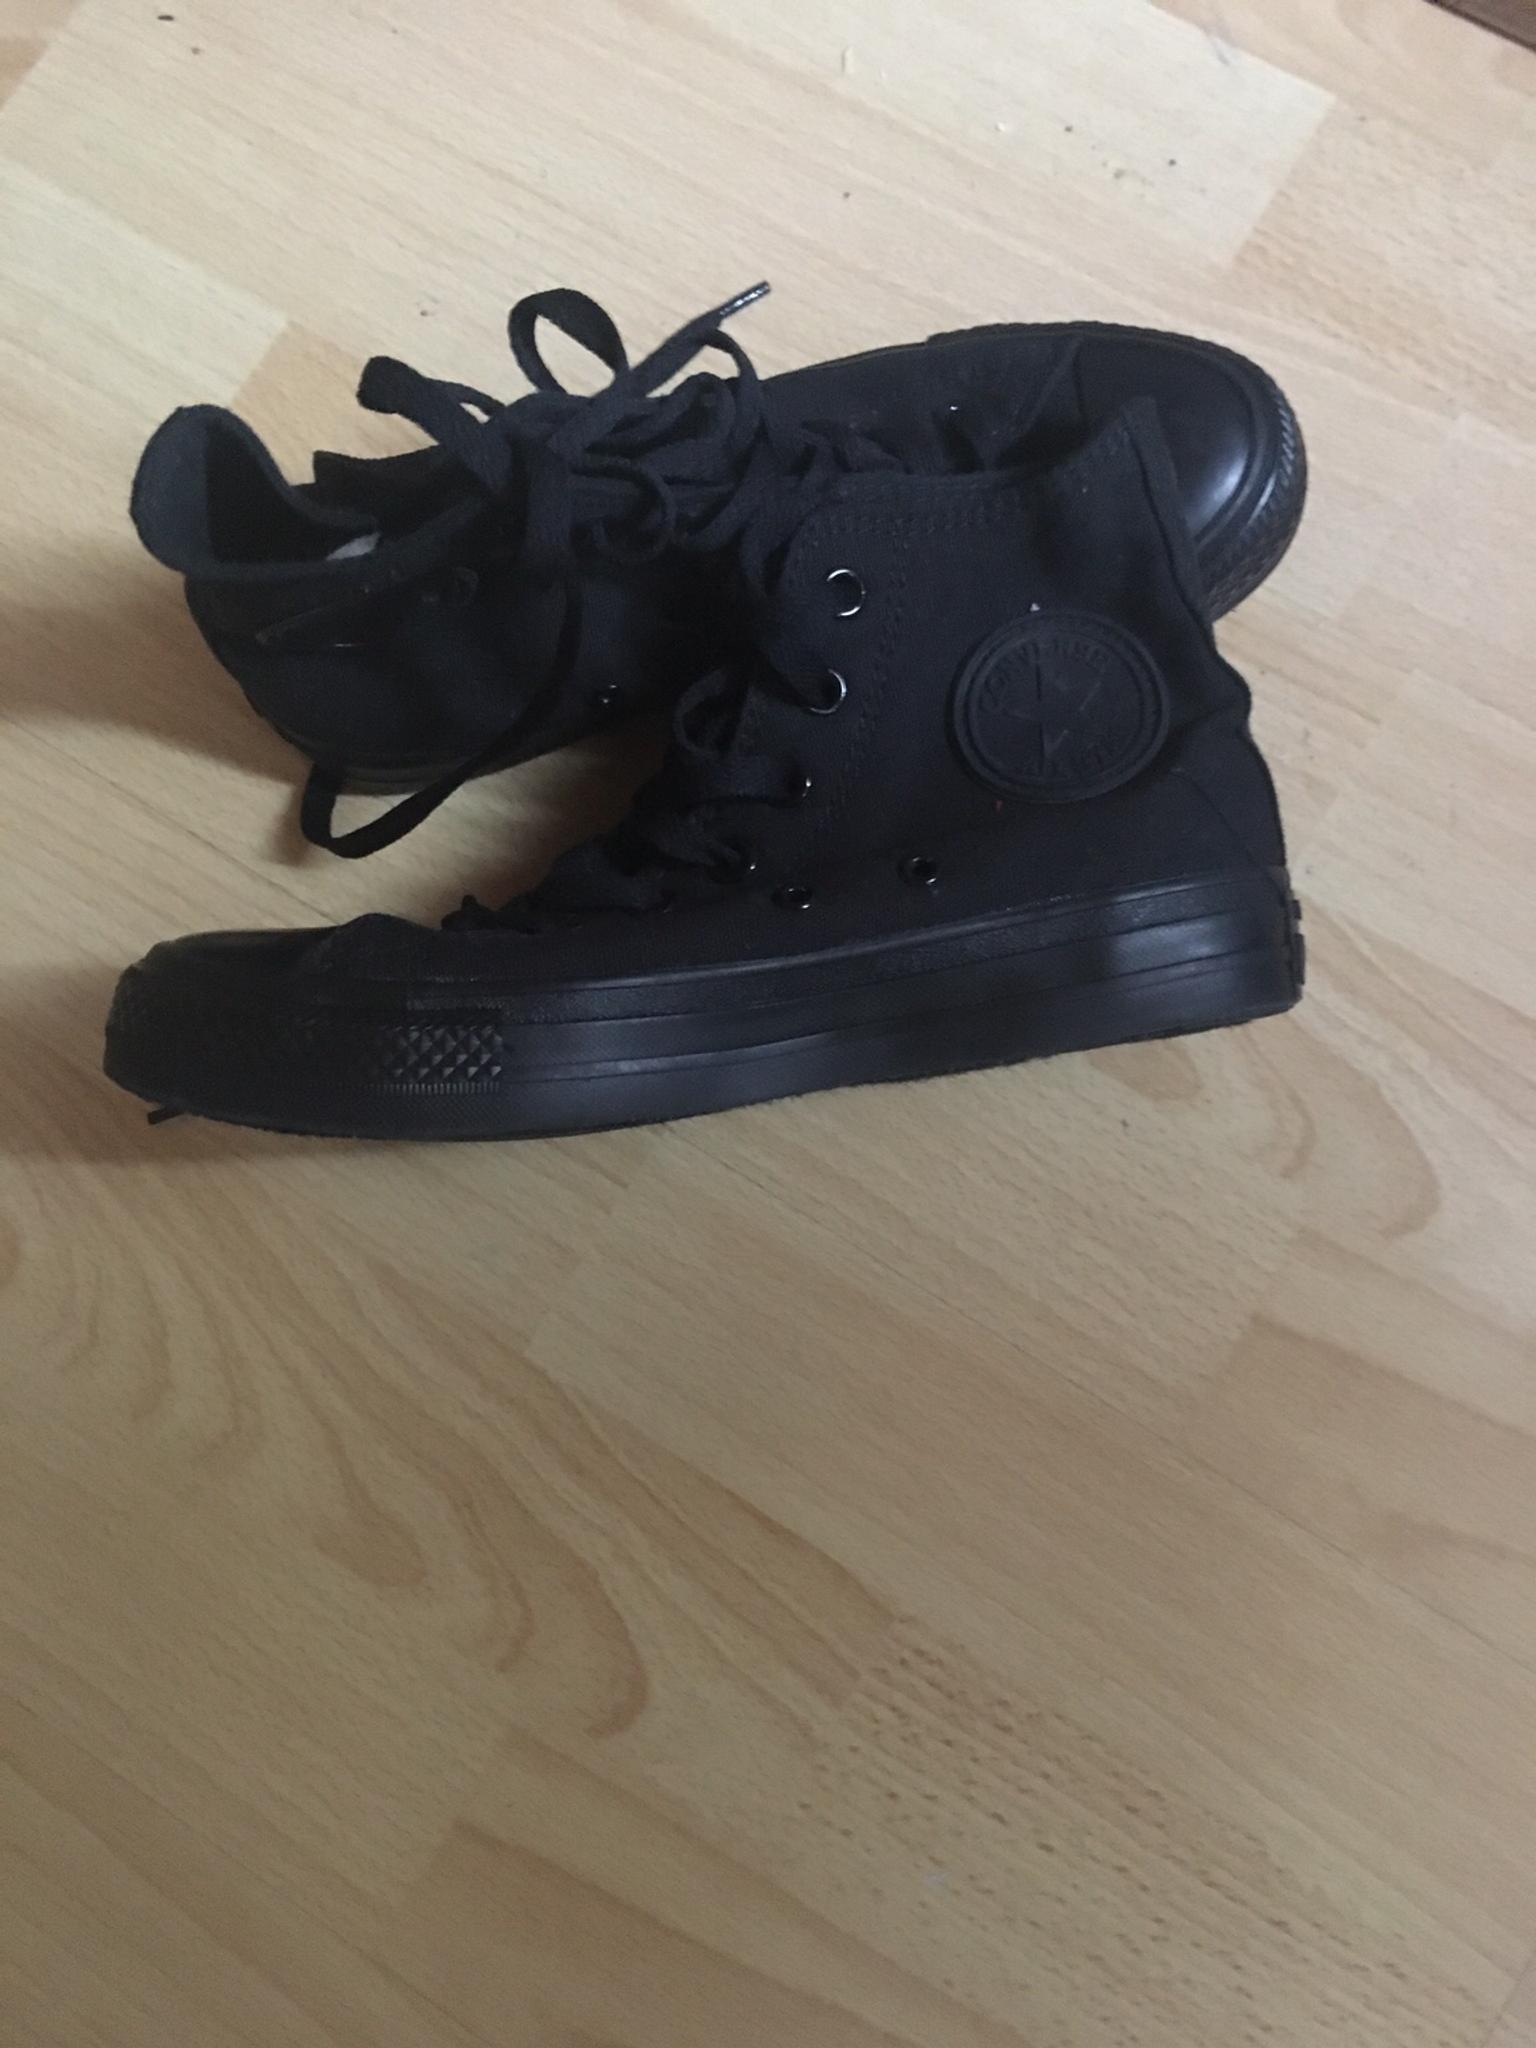 black converse high tops size 5